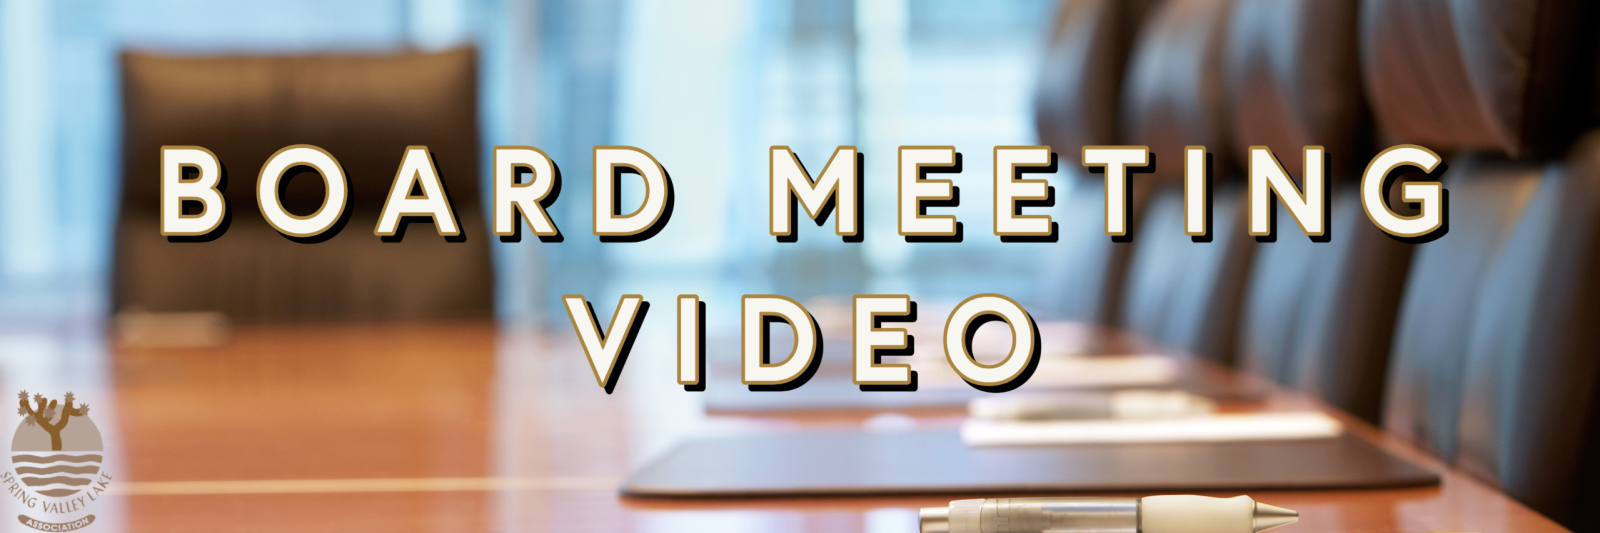 BOD Meeting Video Banner